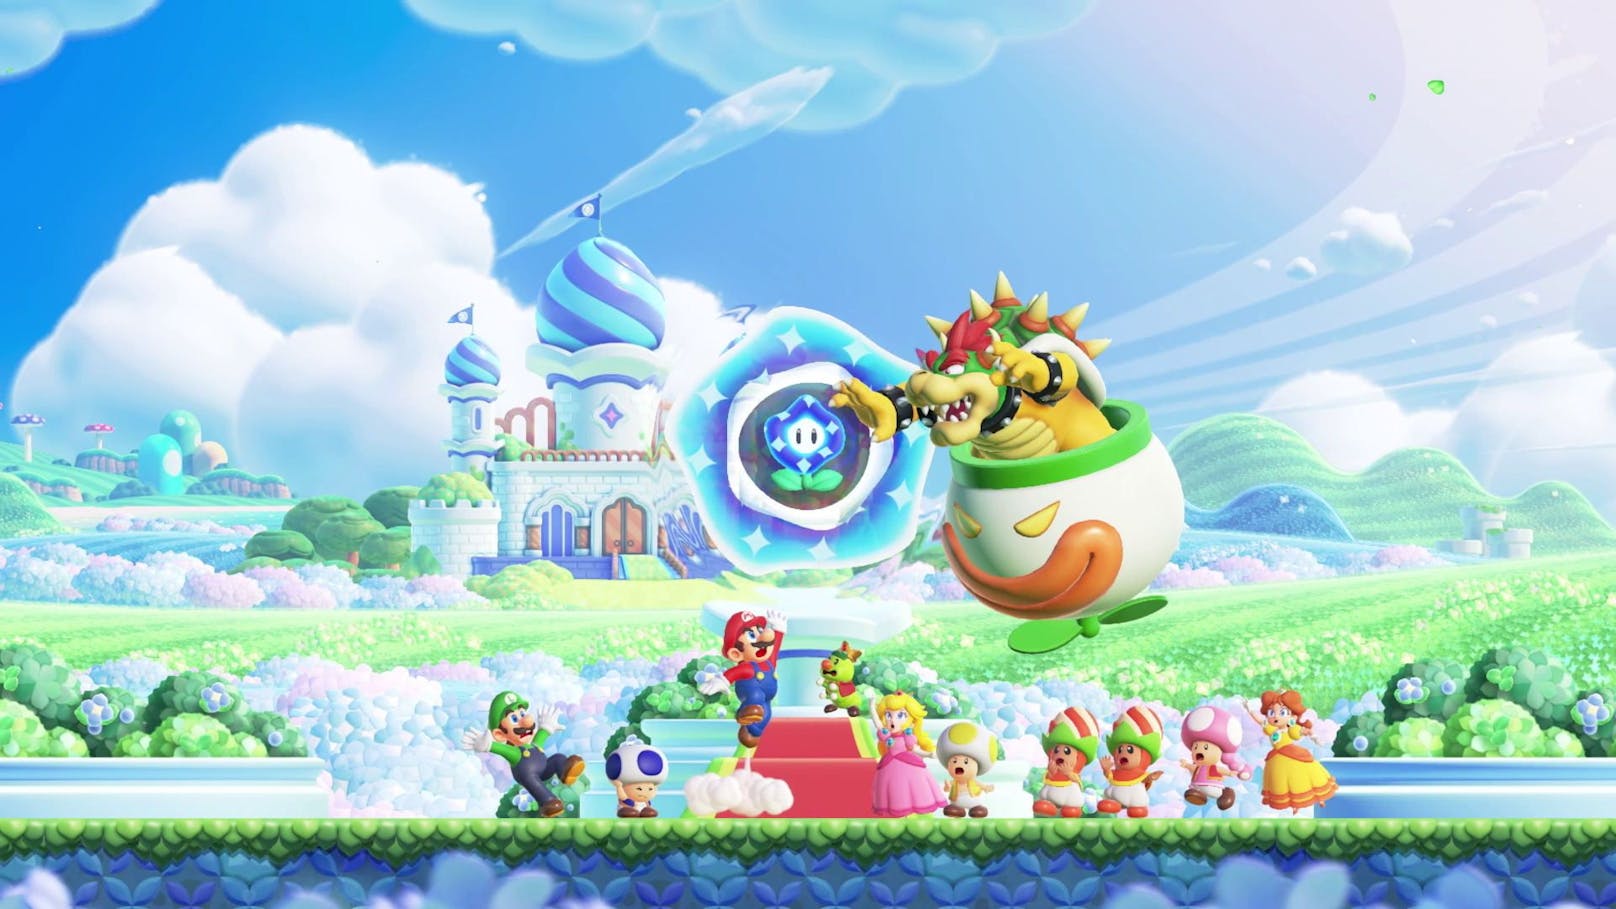 Das neue "Super Mario Bros." ist voller Wunder